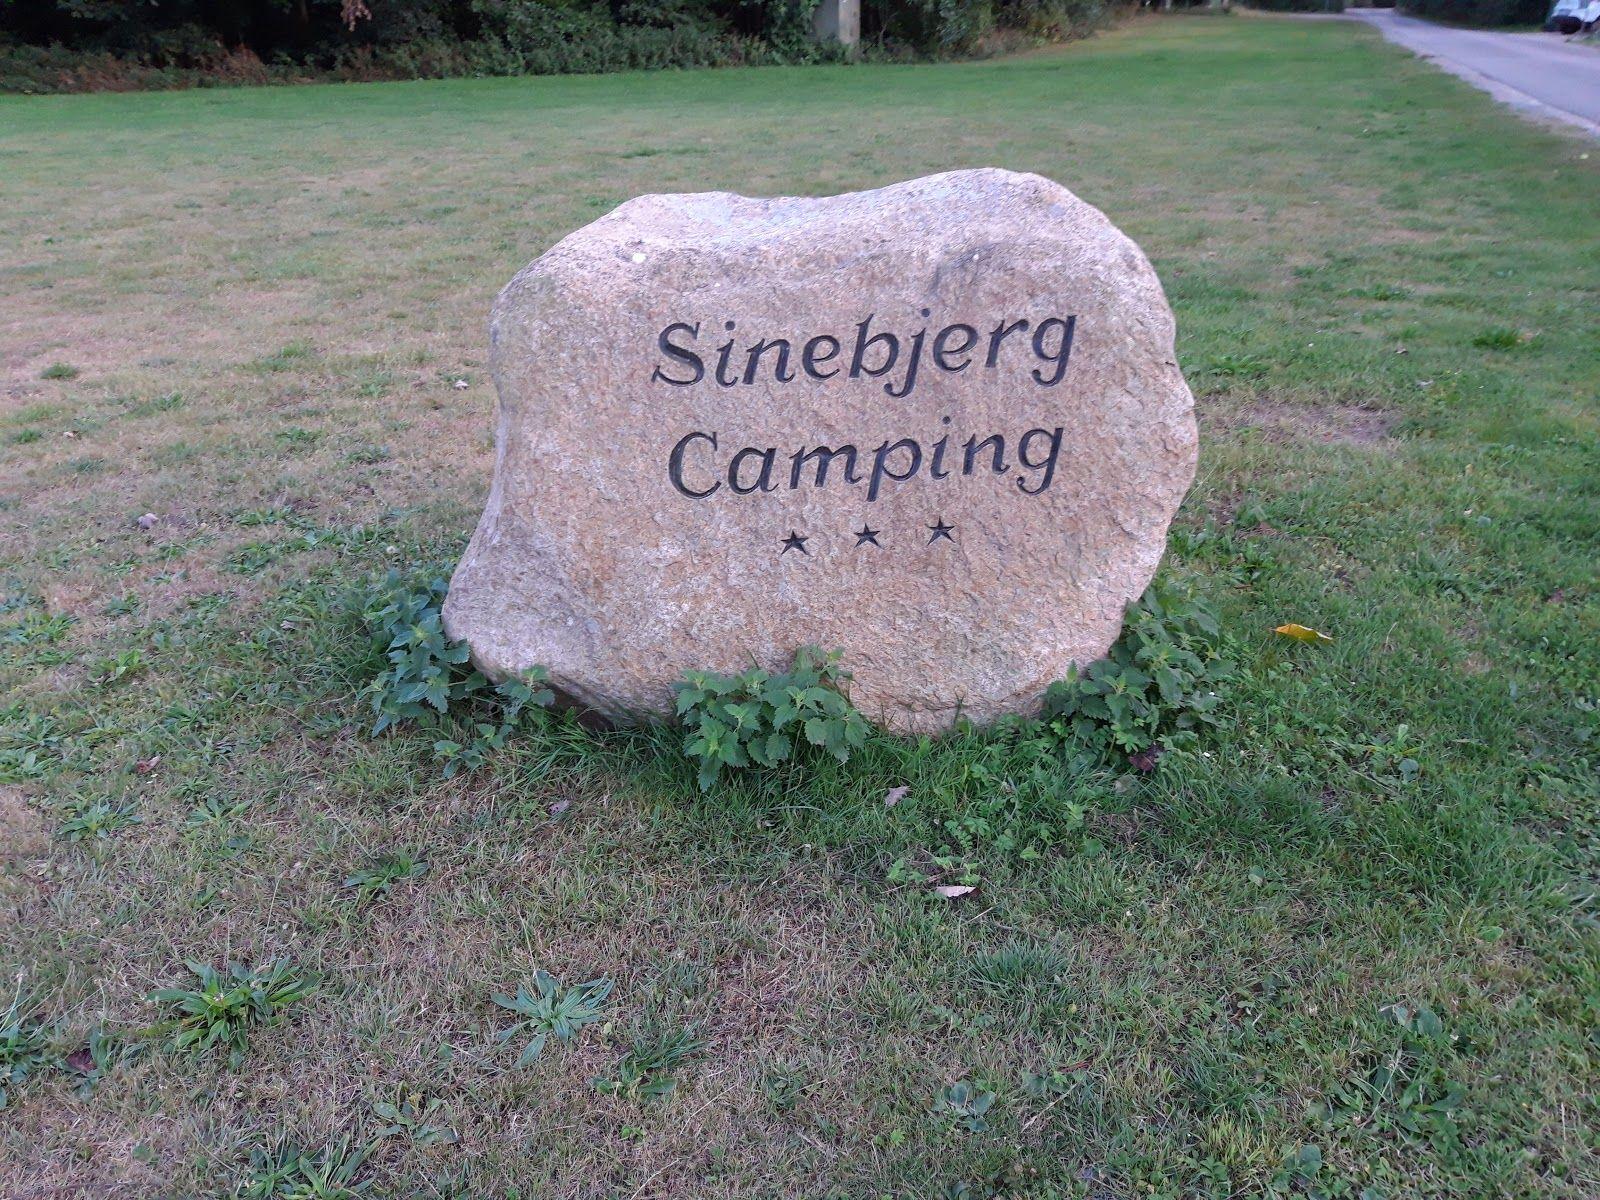 Sinebjerg Camping, Faaborg, Denmark